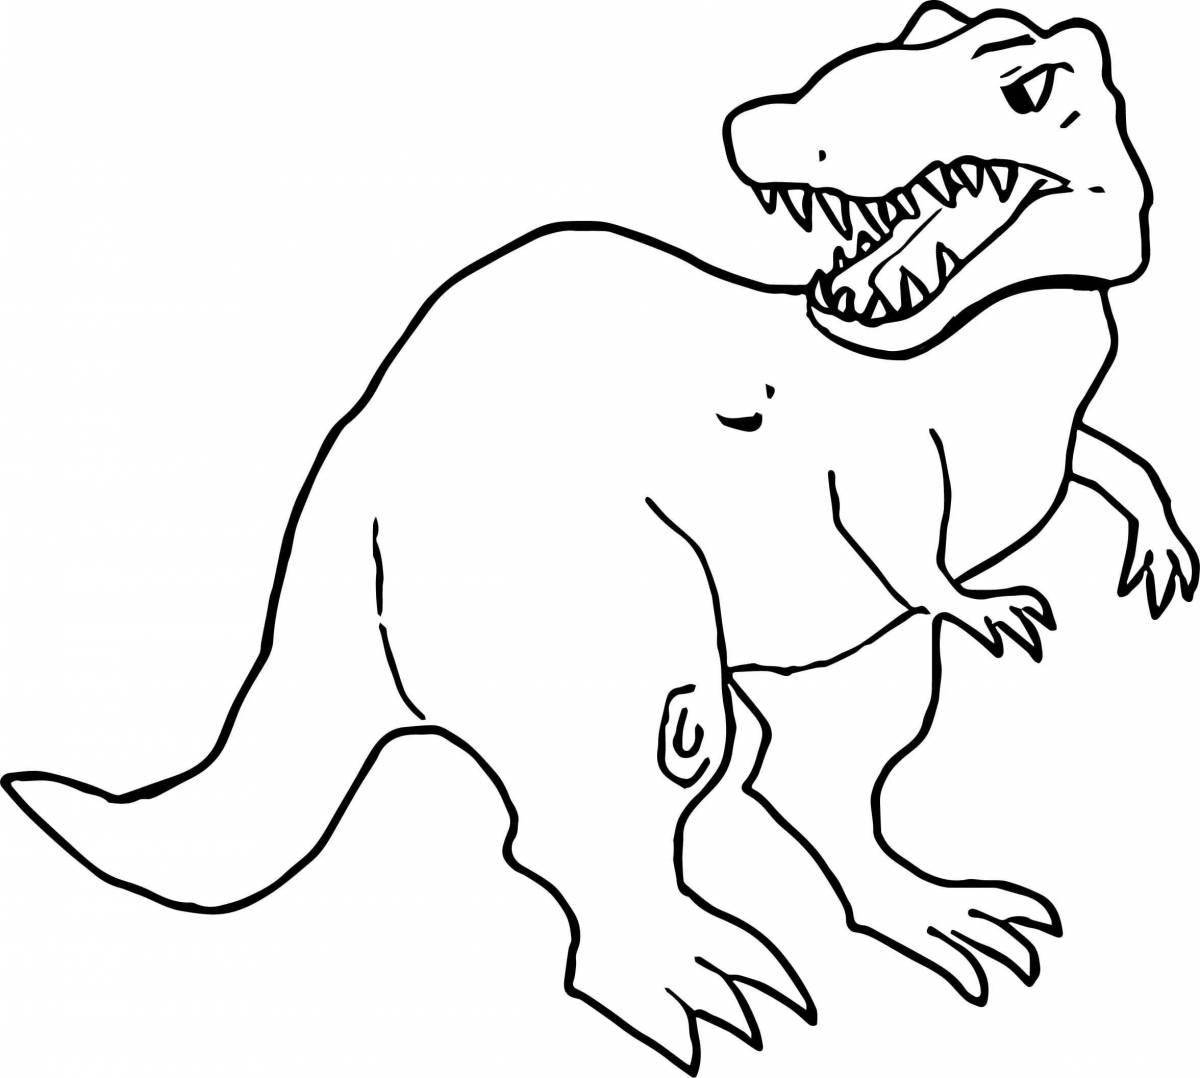 Tyrannosaurus rex glowing seal coloring page